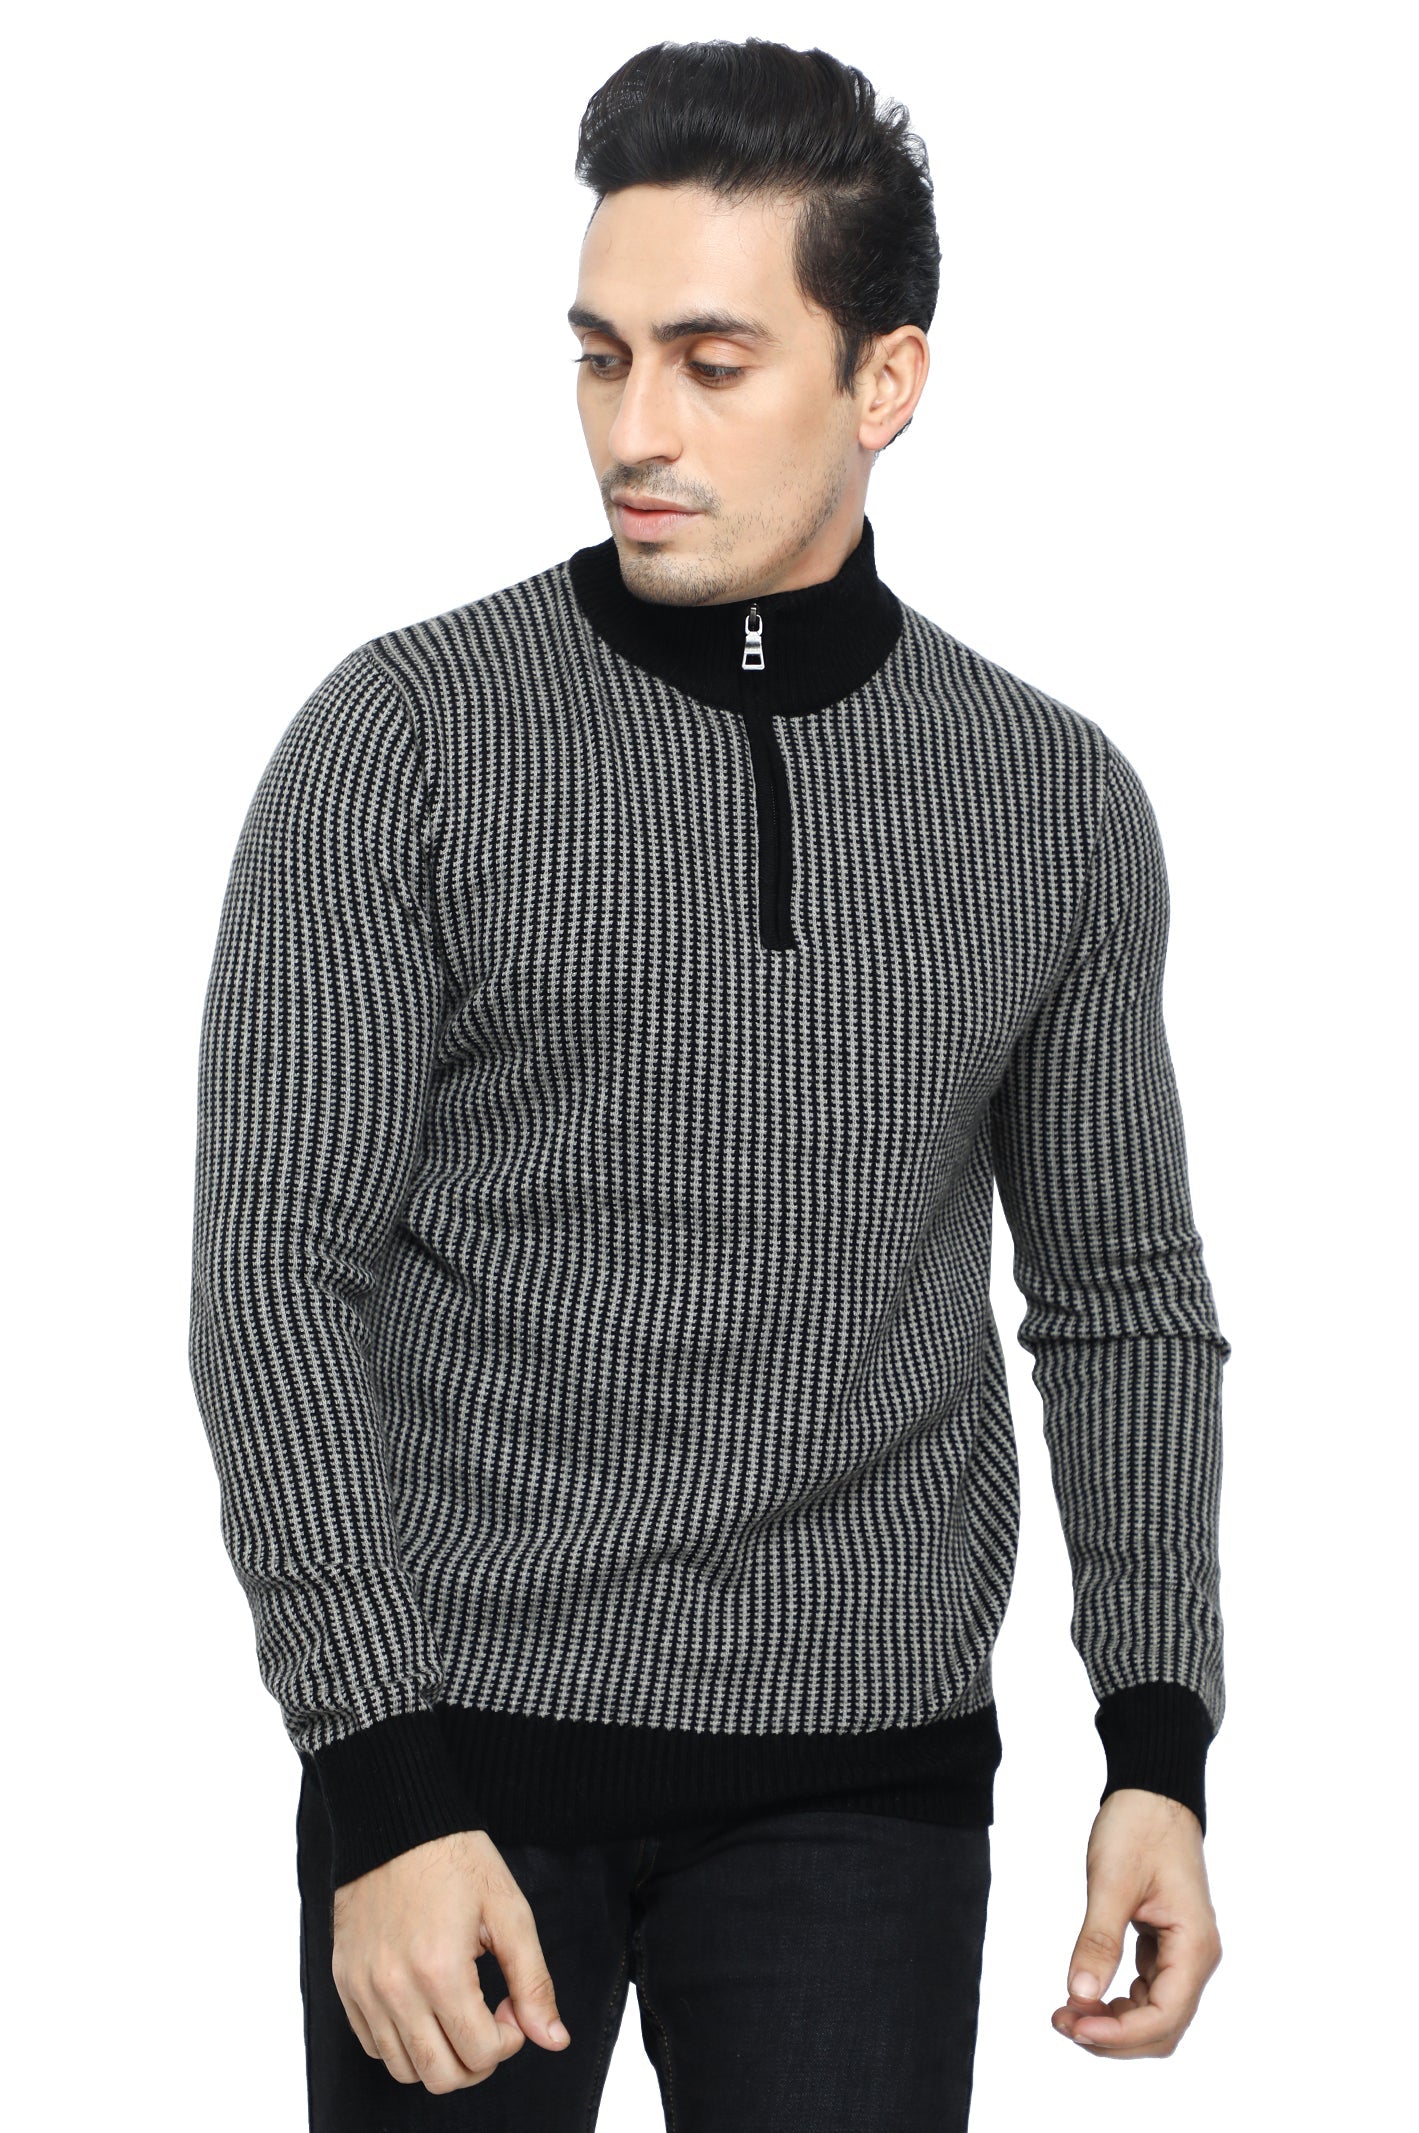 Gents Sweater In Black SKU: SA577-BLACK - Diners